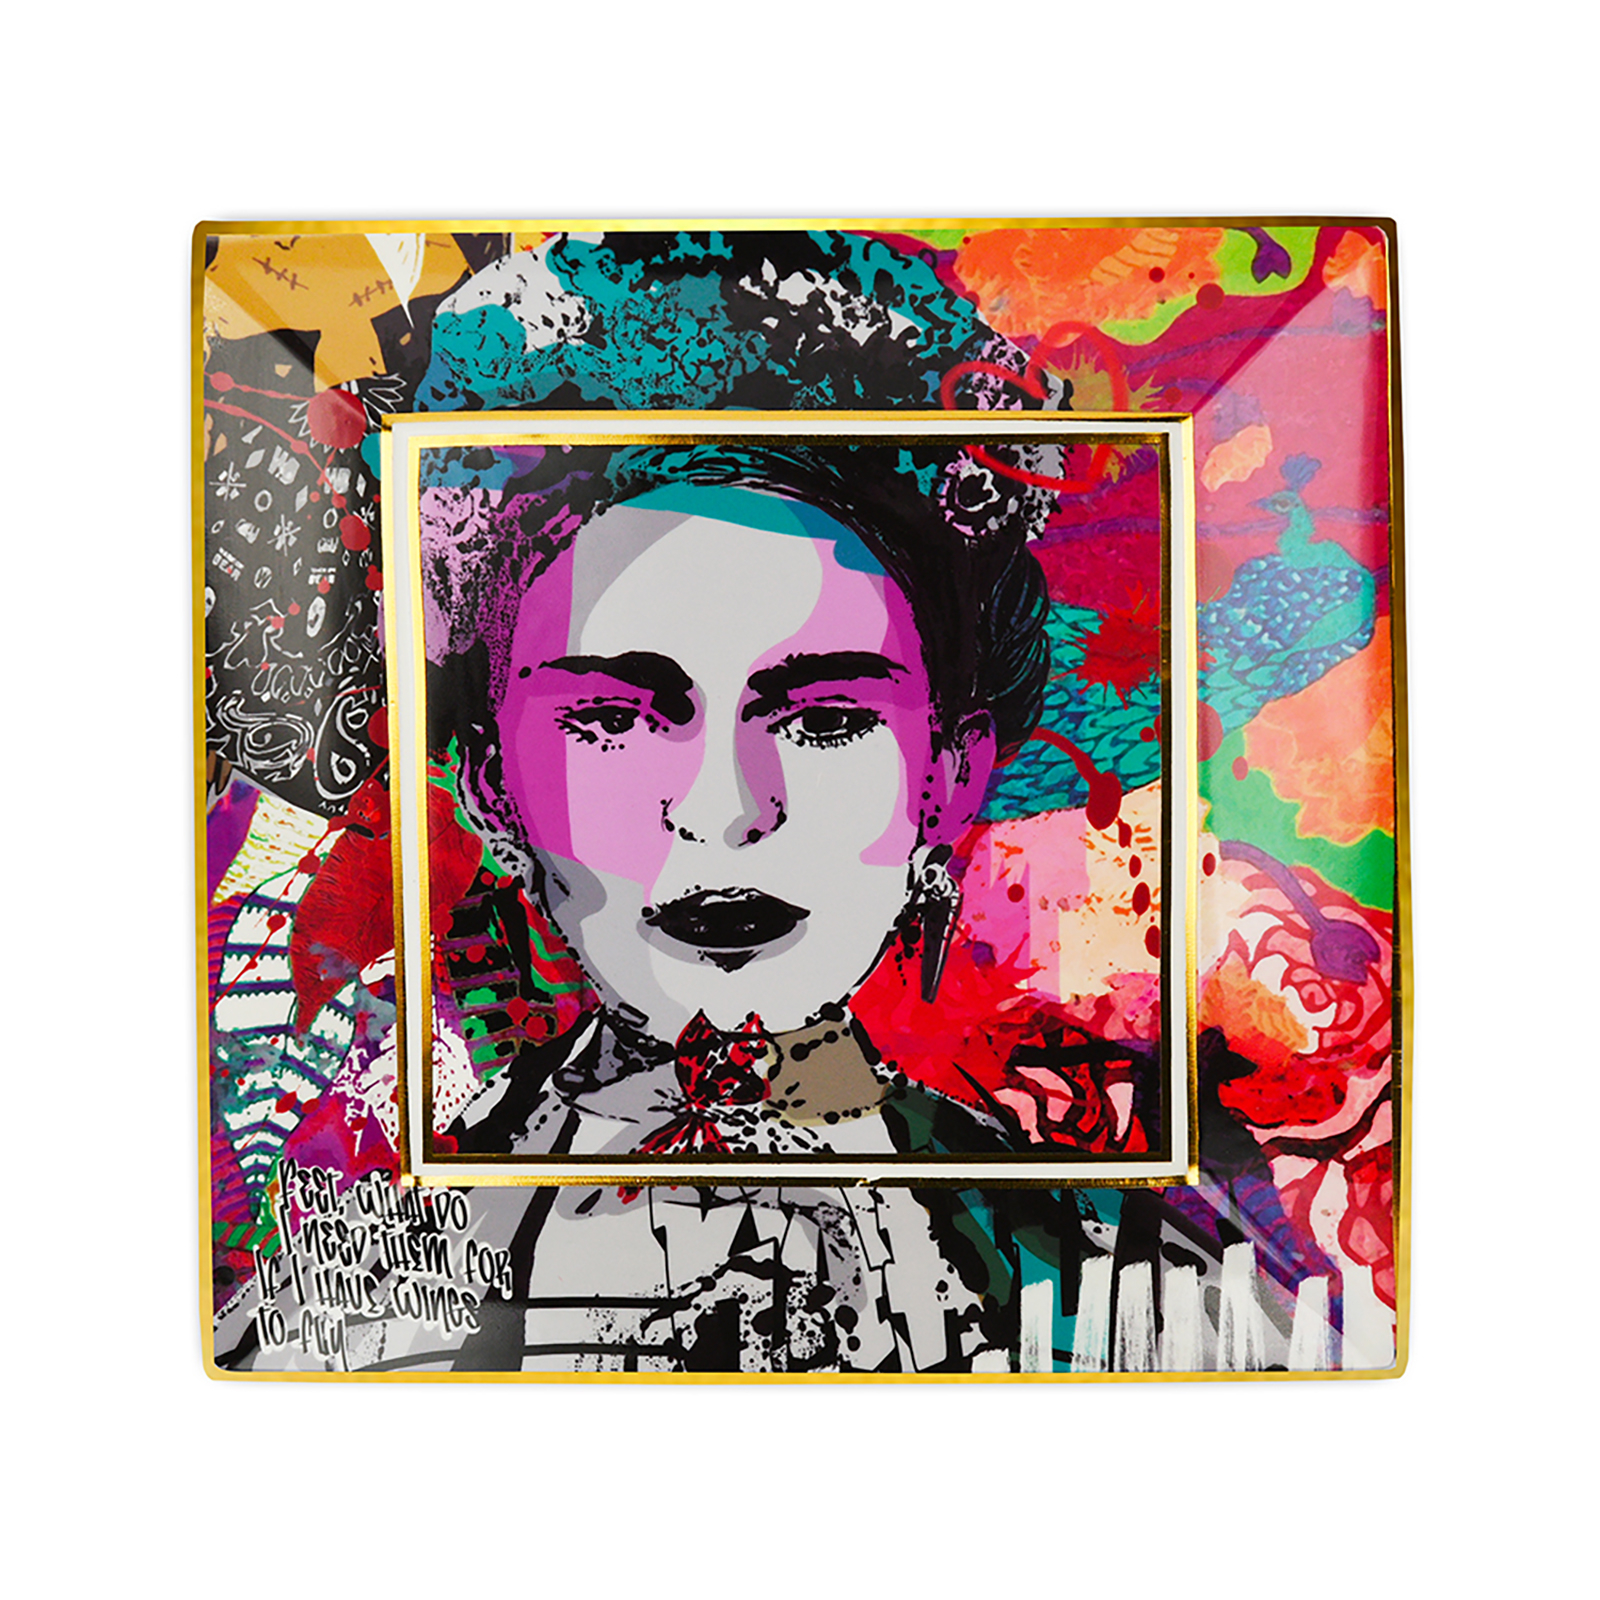 Baci Milano Street Art Gift Tepsi 25 cm x 25 cm Frida